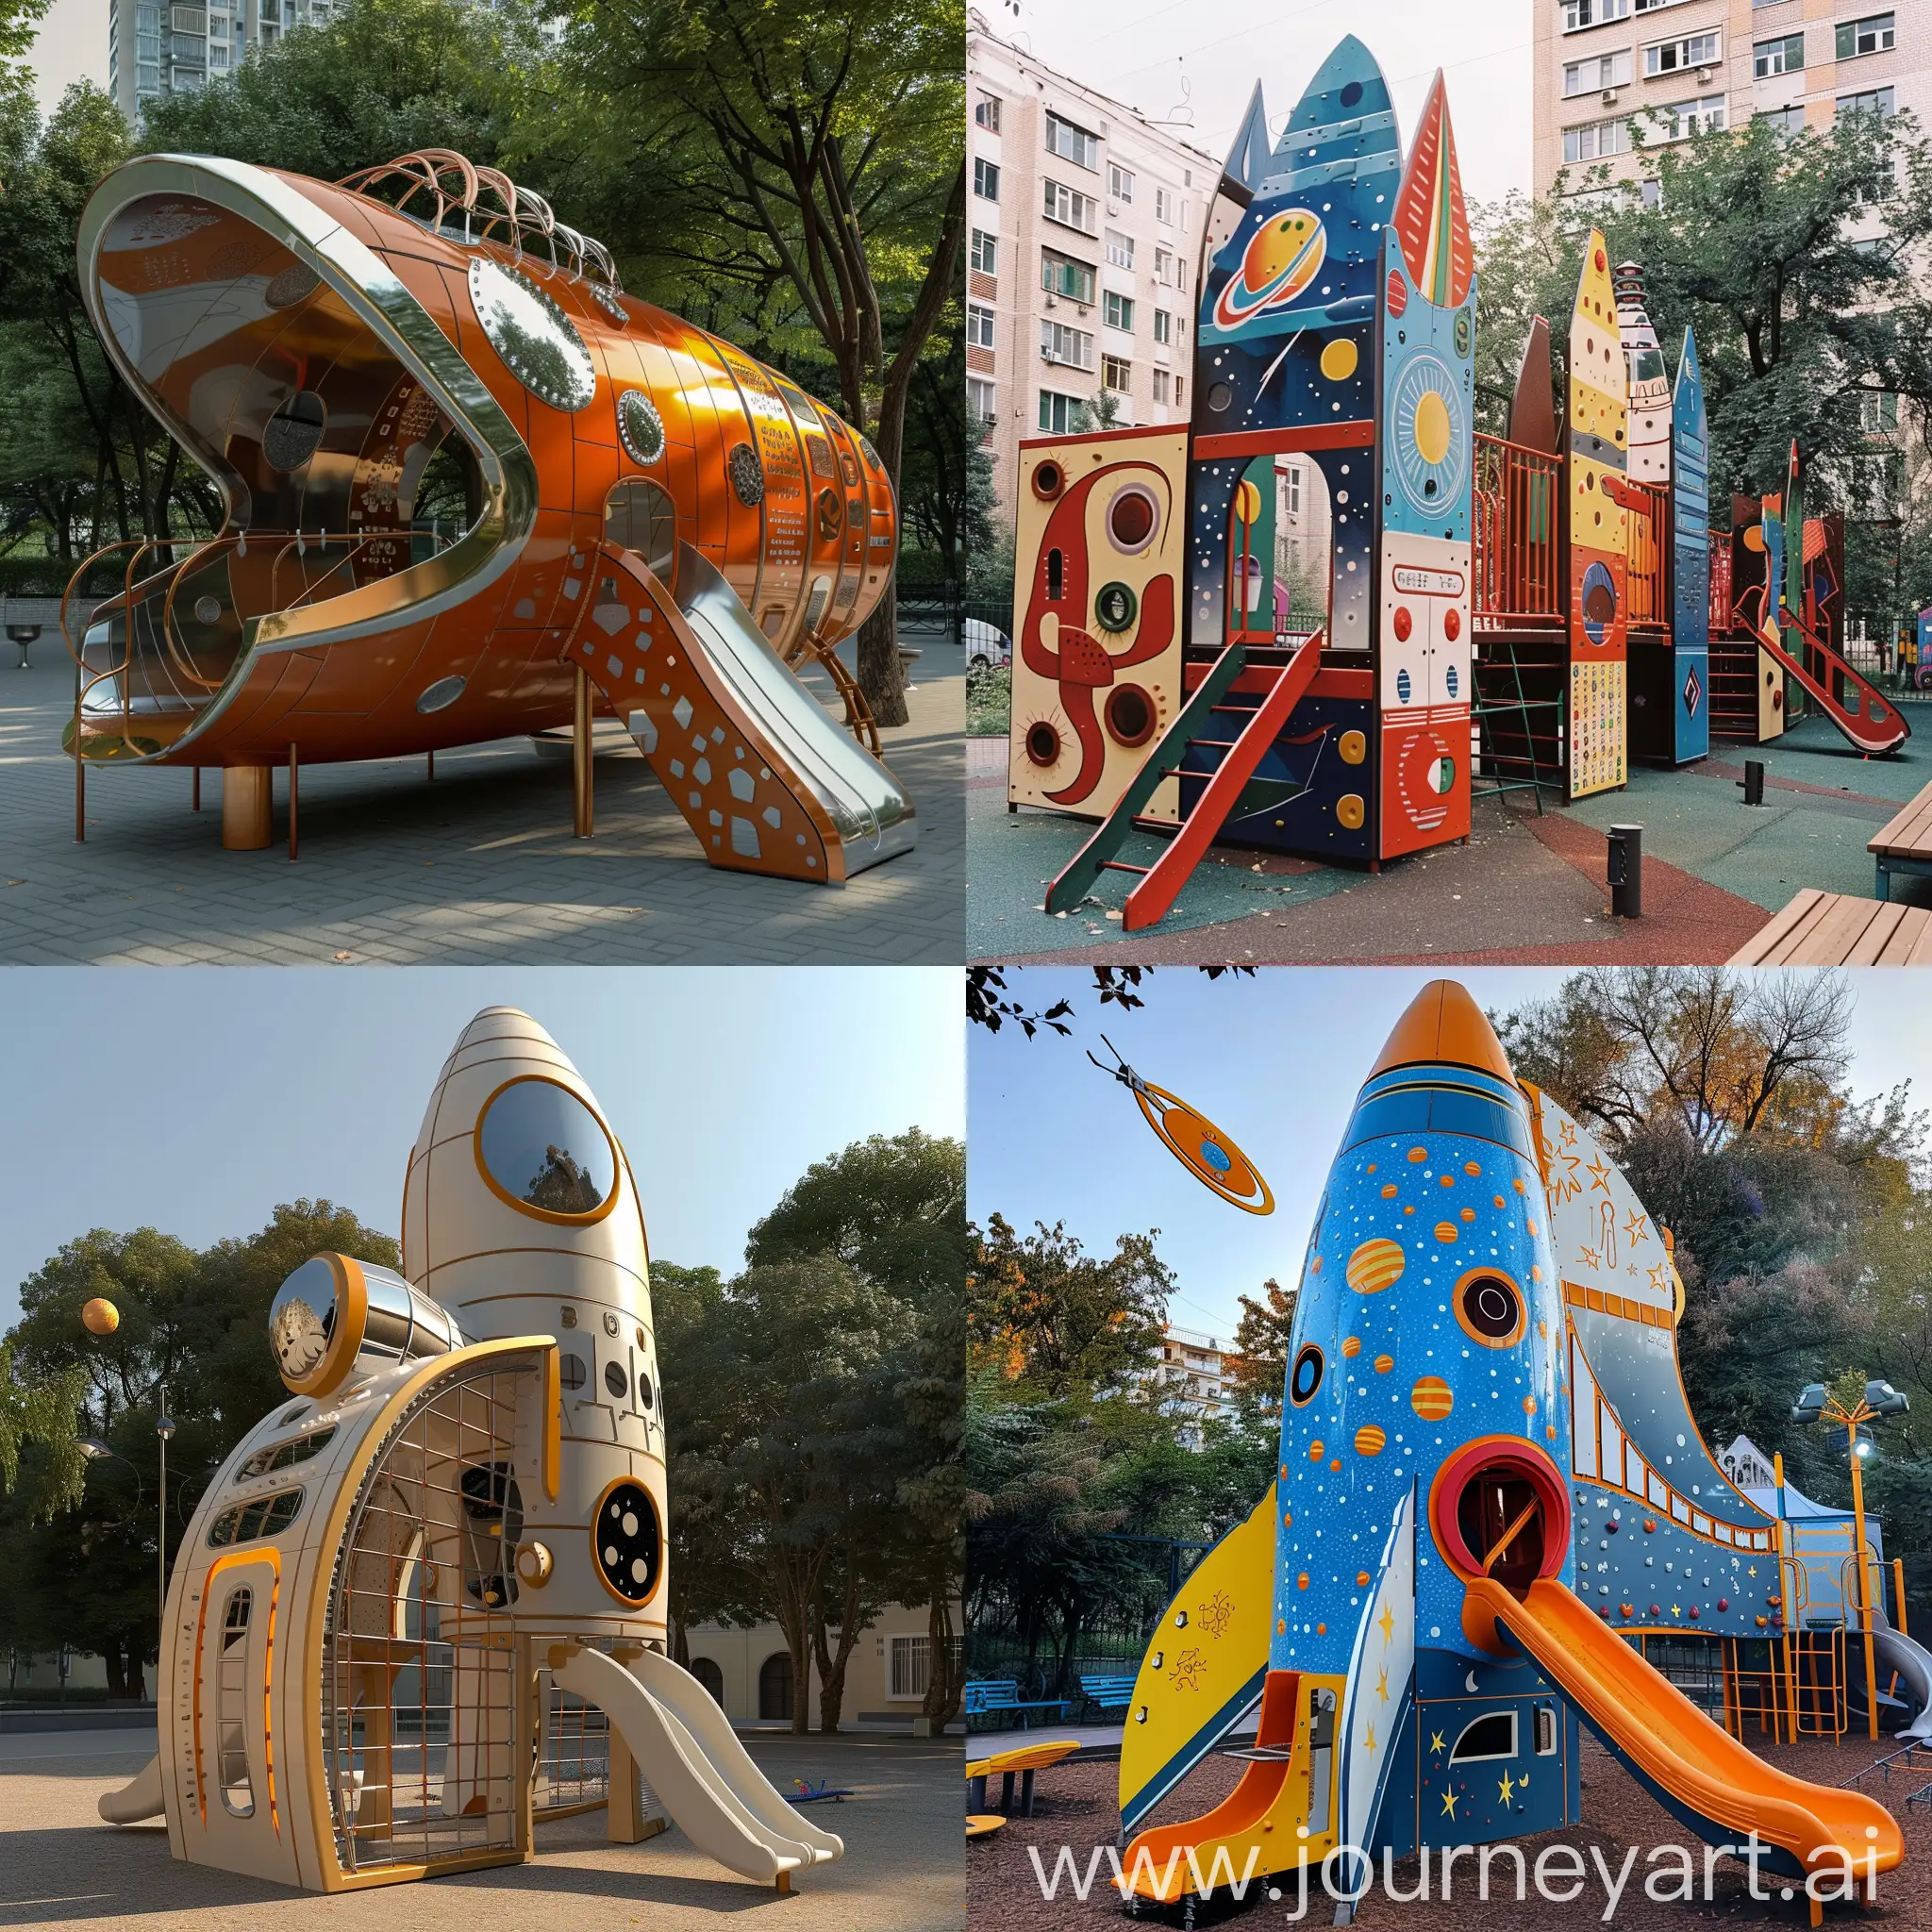 SpaceThemed-Playground-for-Street-Children